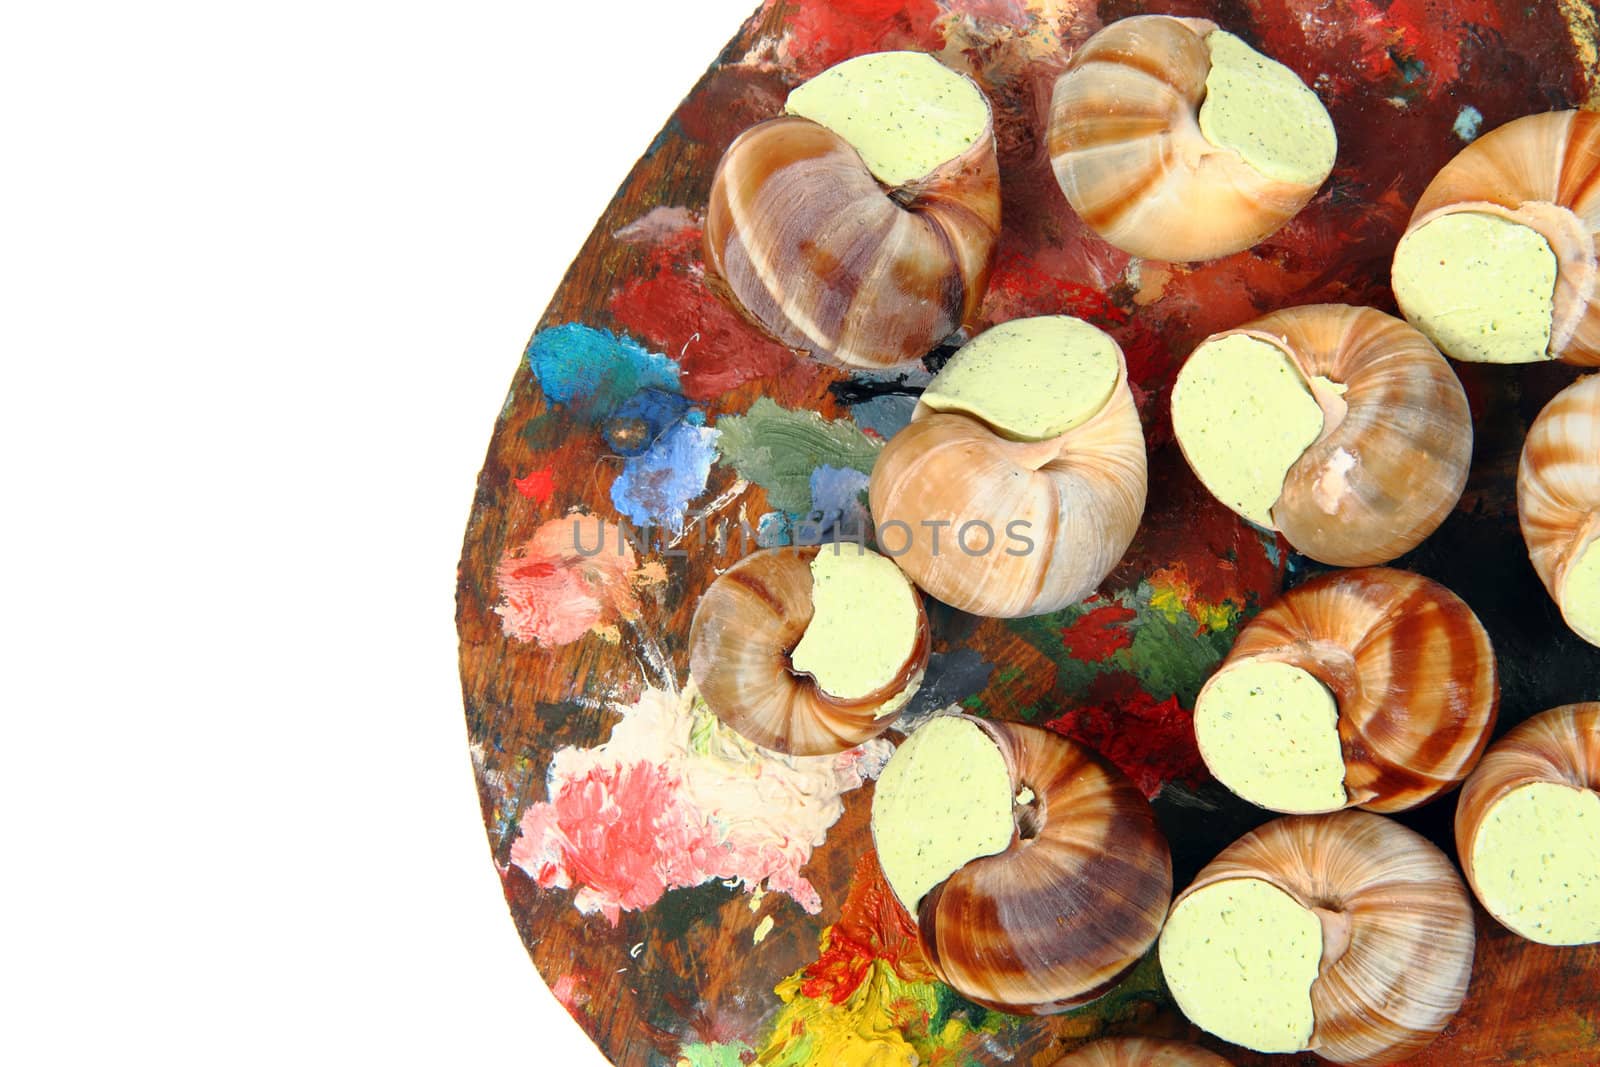 snails as french gourmet food  by jonnysek